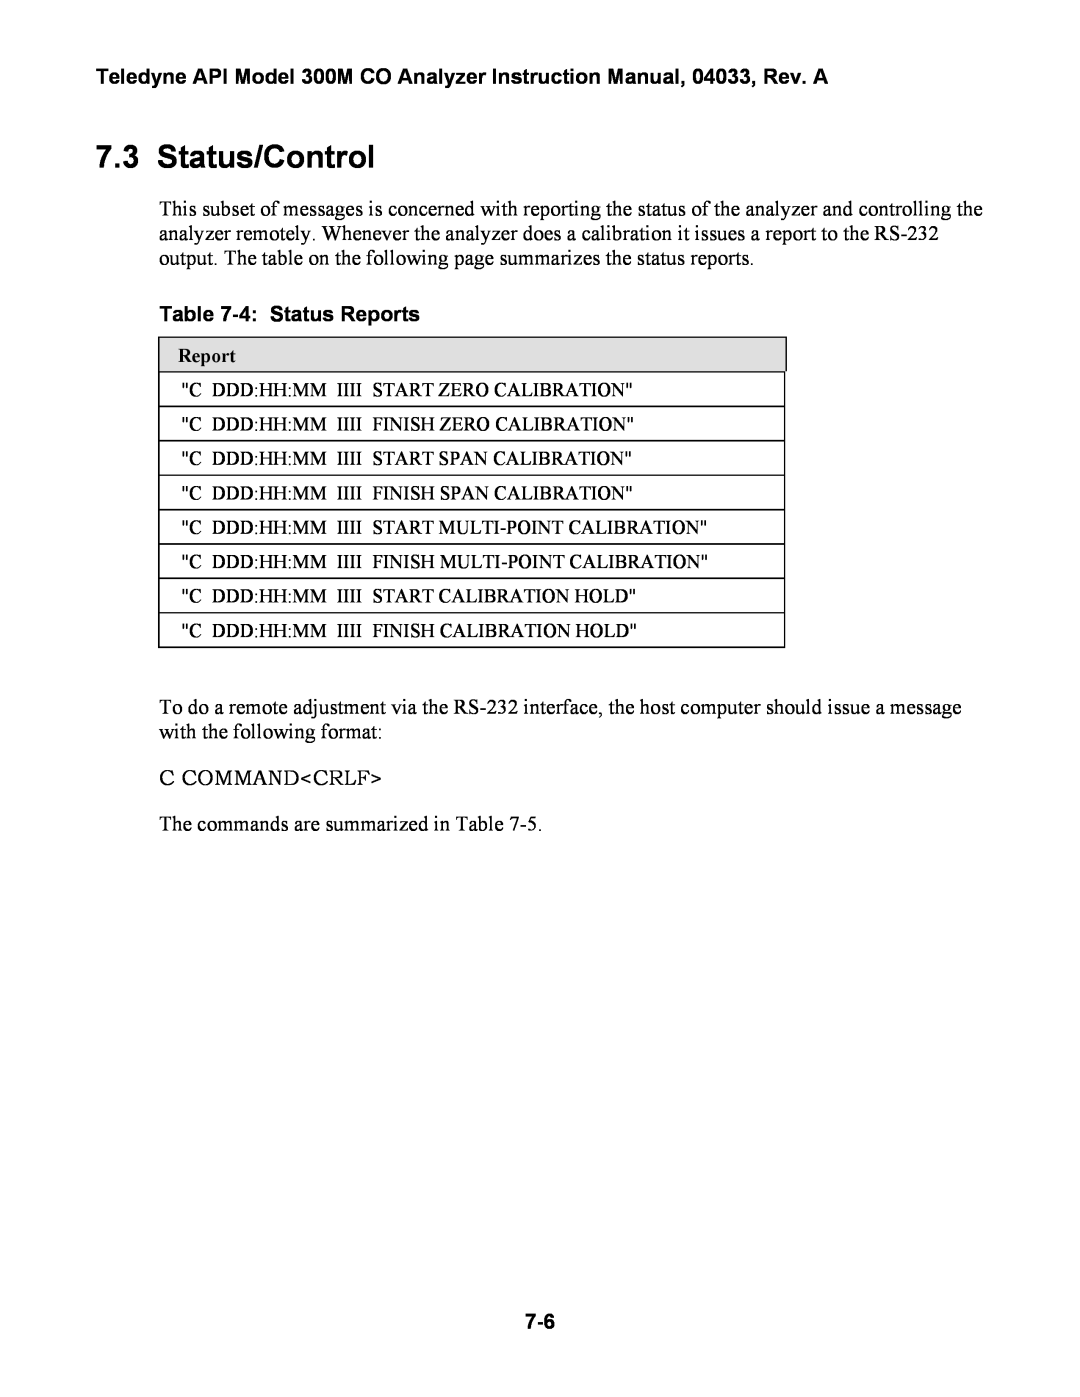 Teledyne 300M instruction manual Status/Control, 4 Status Reports 